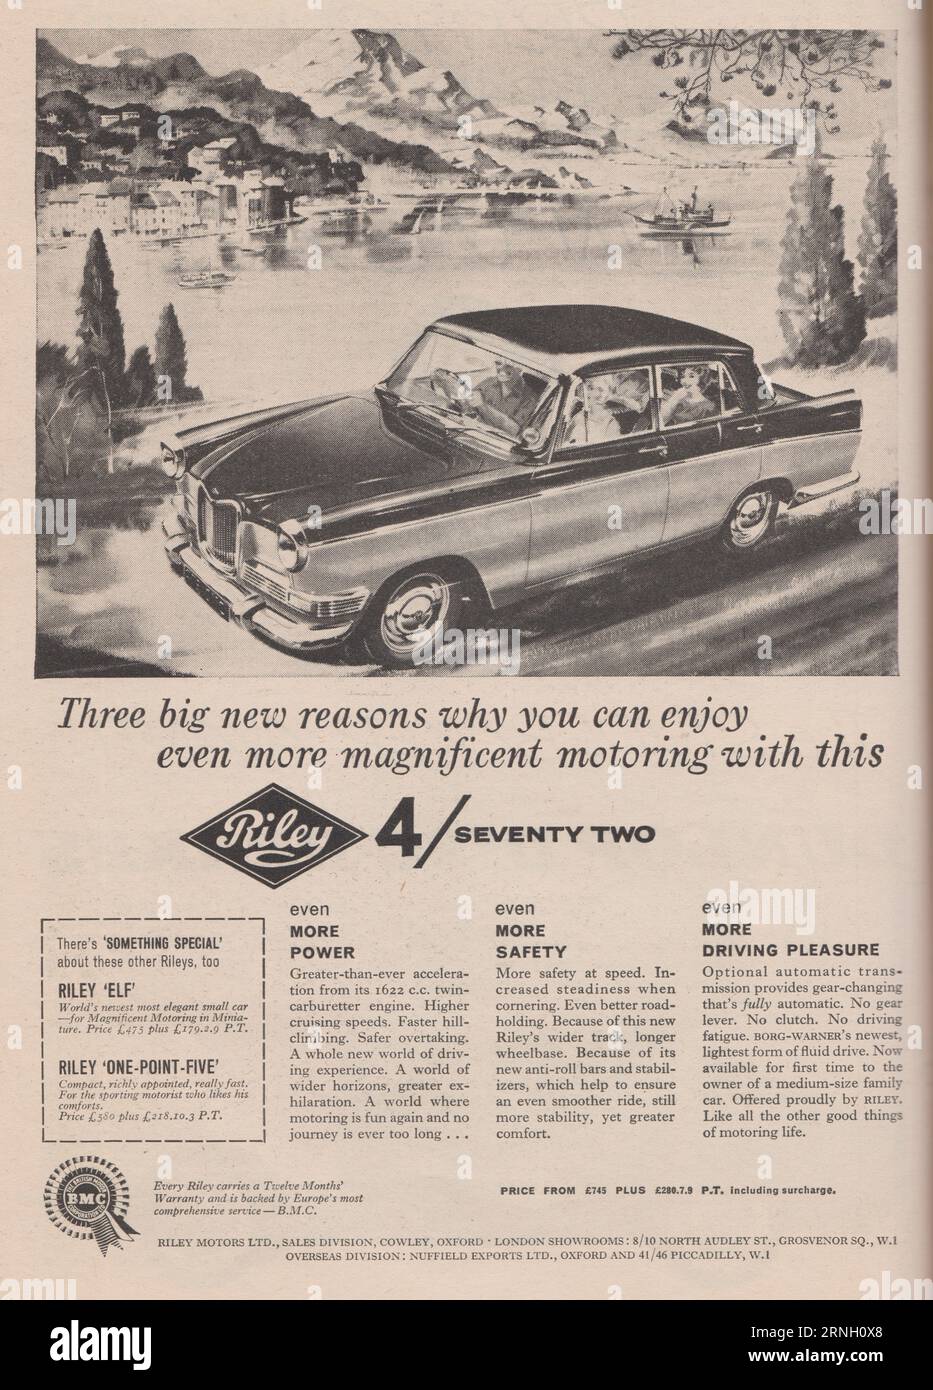 Riley Motors Ltd vintage advert - Riley 4/seventy two / Riley Elf / Riley One-Point-Five. Stock Photo